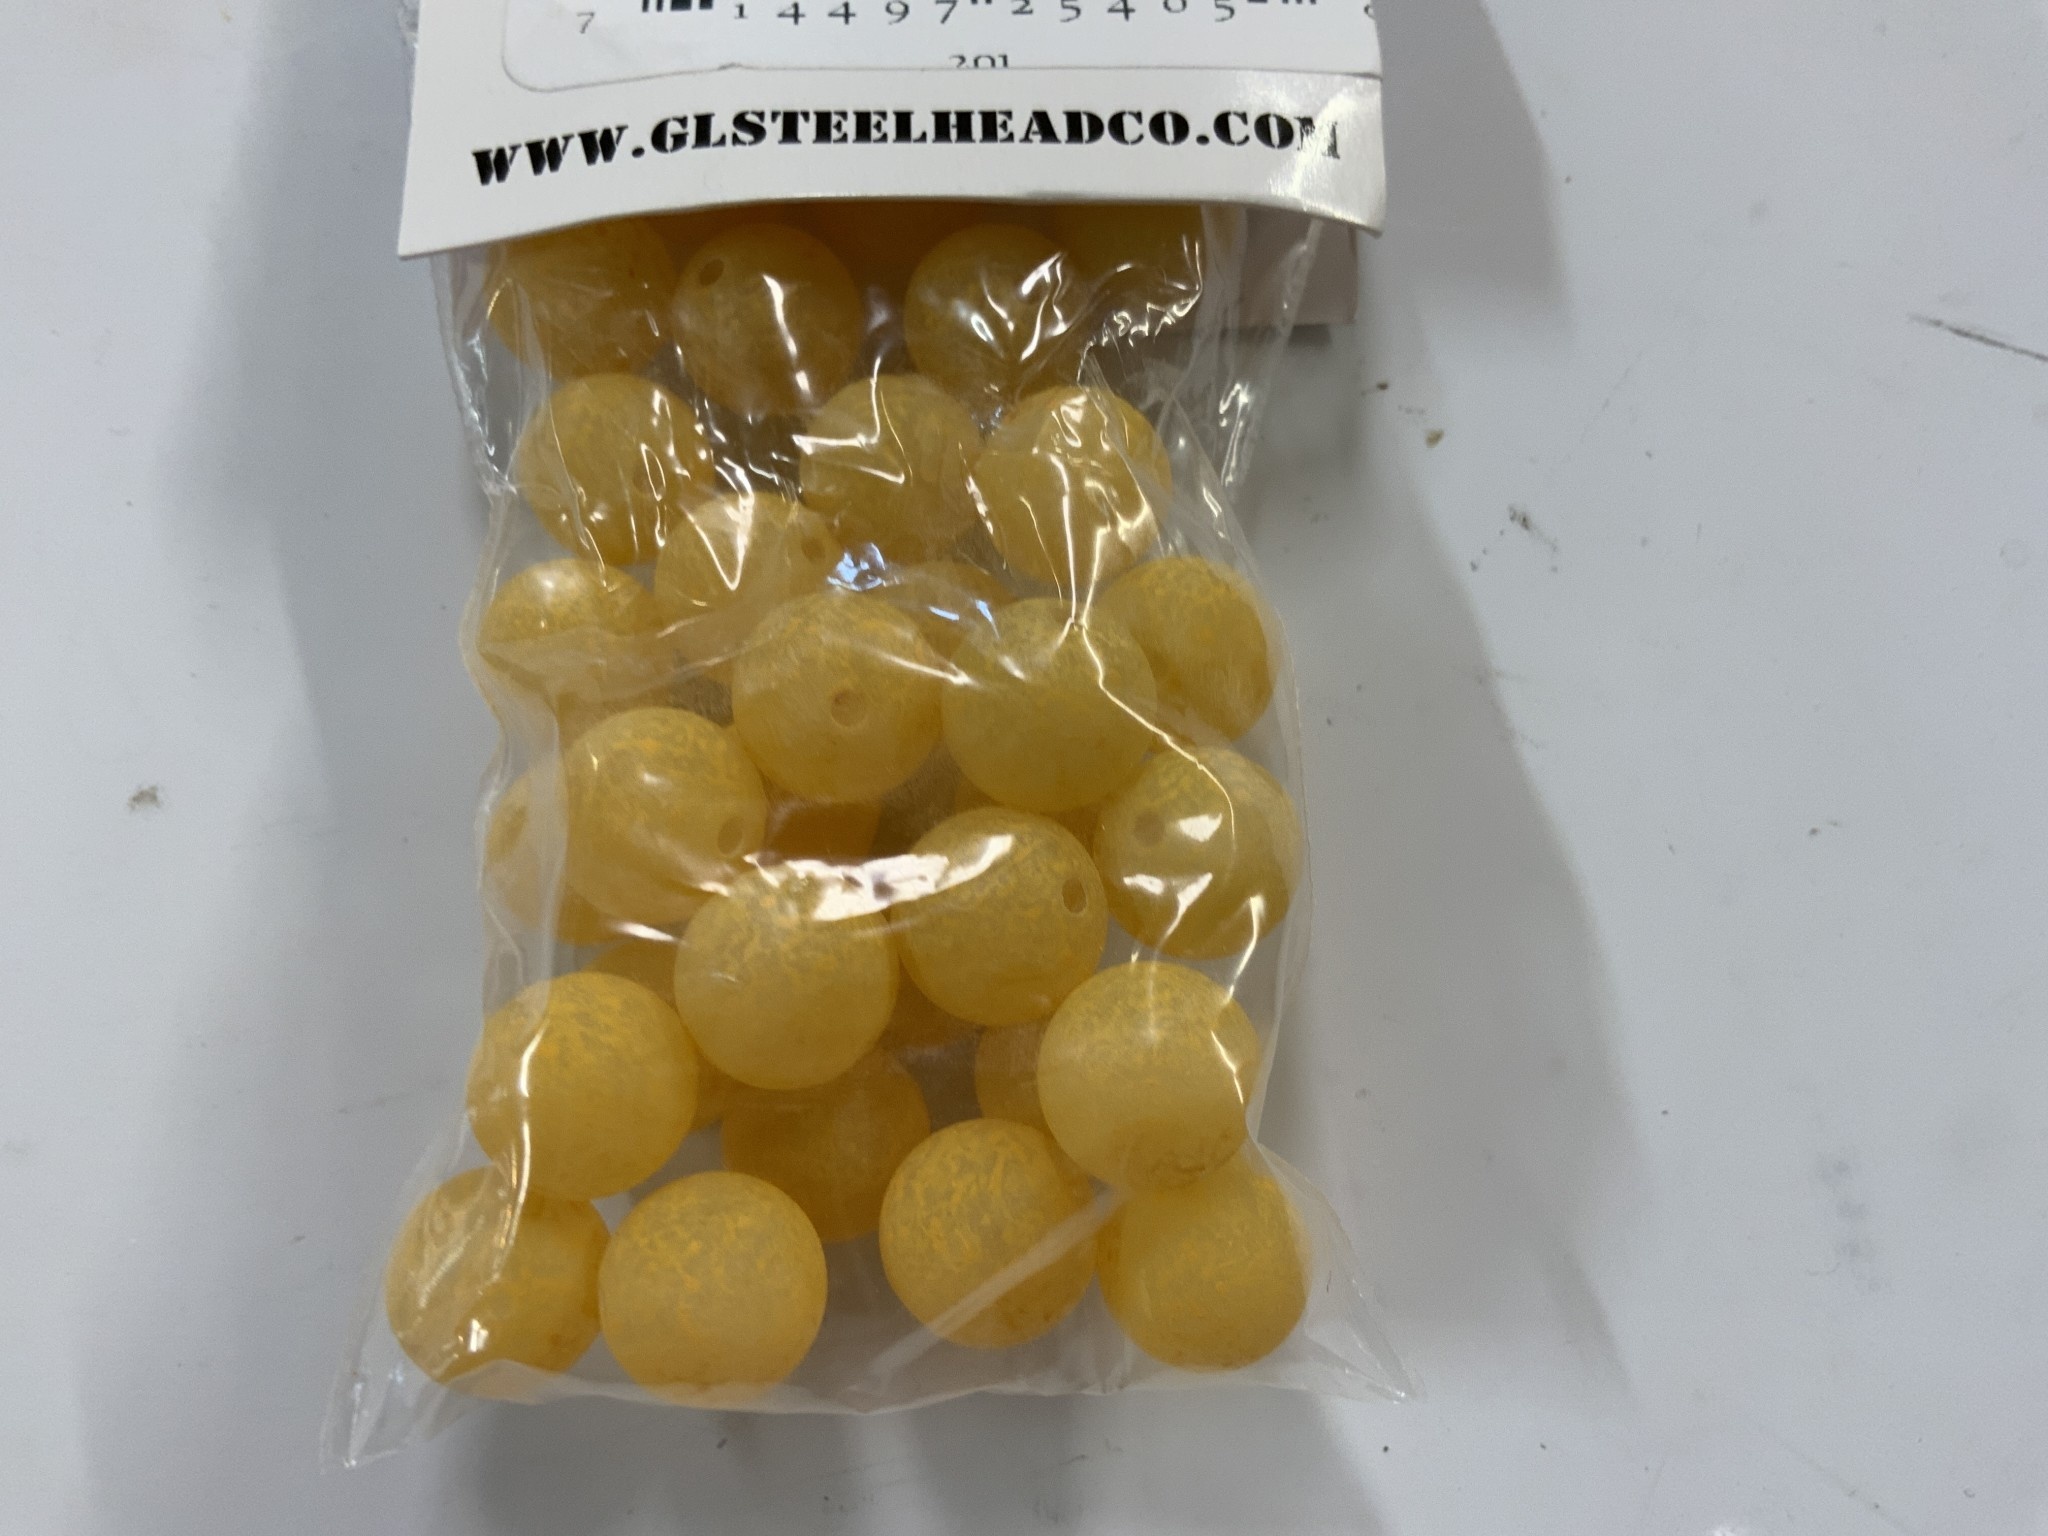 Great Lakes Steelhead co. Trick Em' Beads 10mm Egg-zacktly